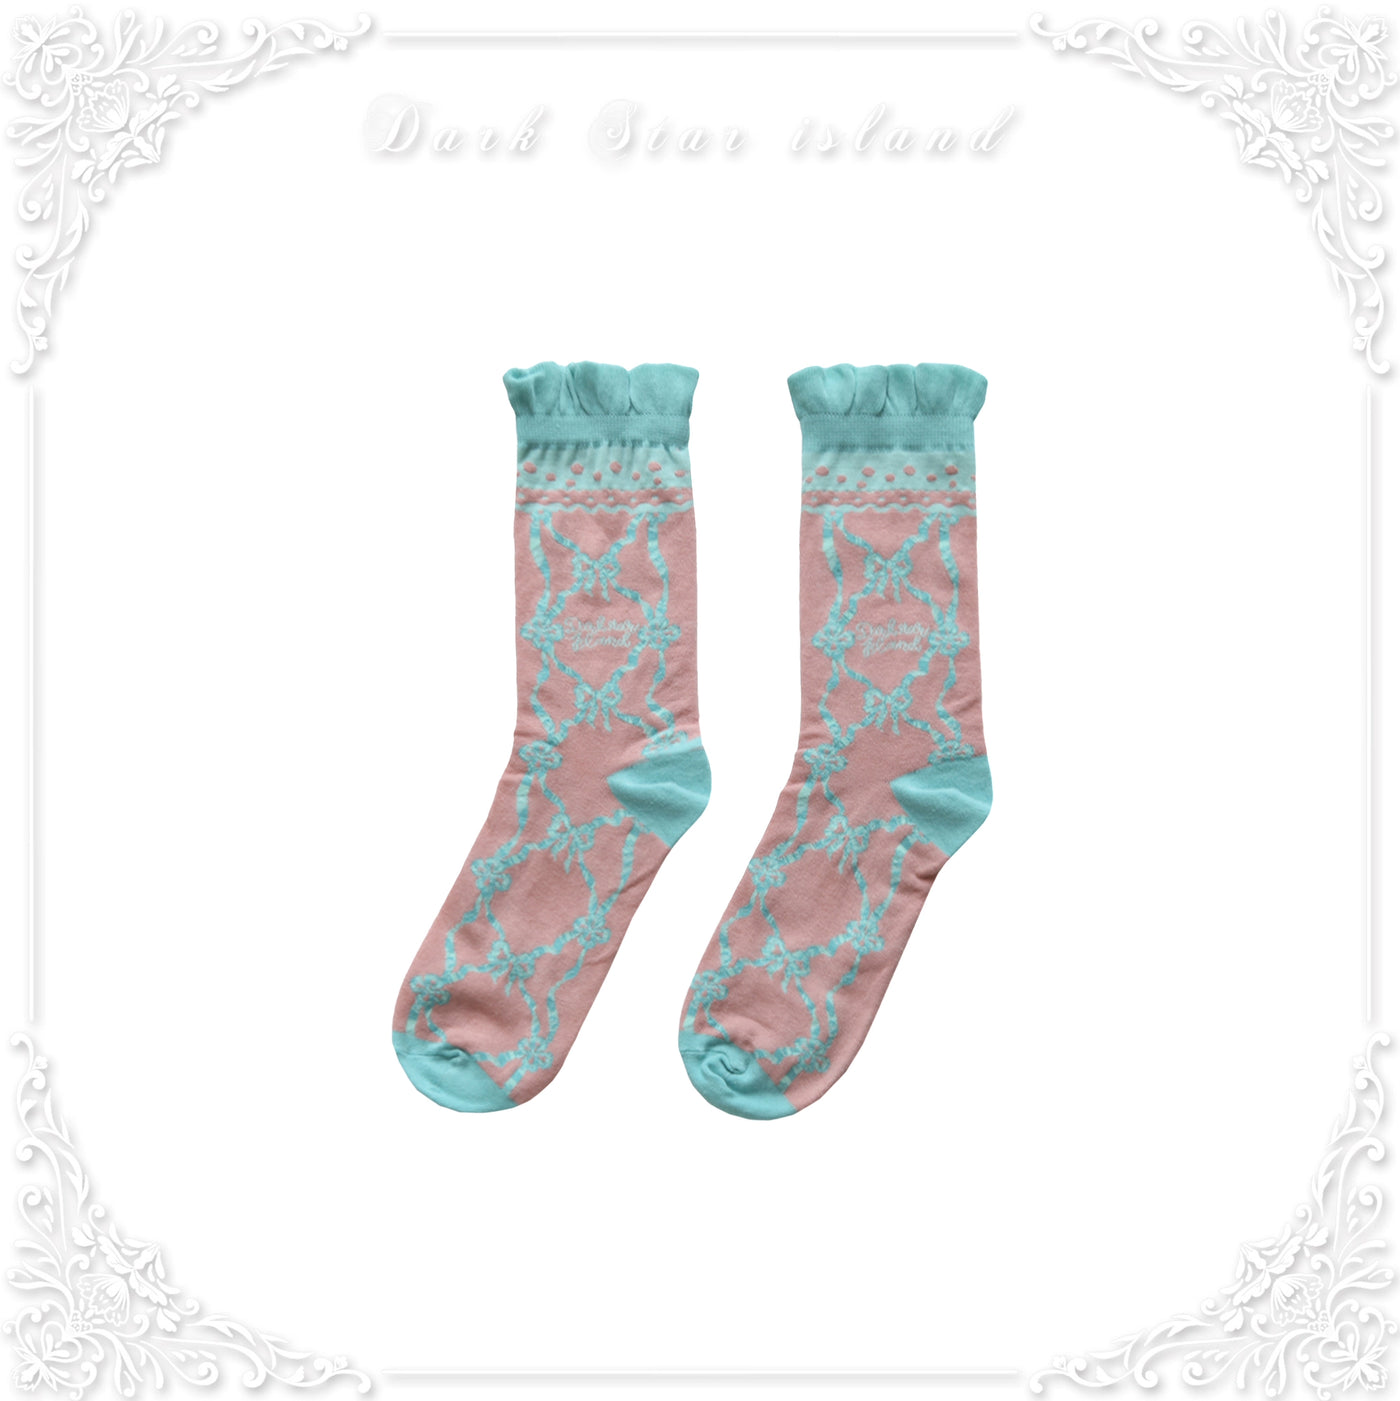 Dark Star Island~Kawaii Lolita Dress OP Blouse SK Set Free size Pink-blue knitted cotton socks 